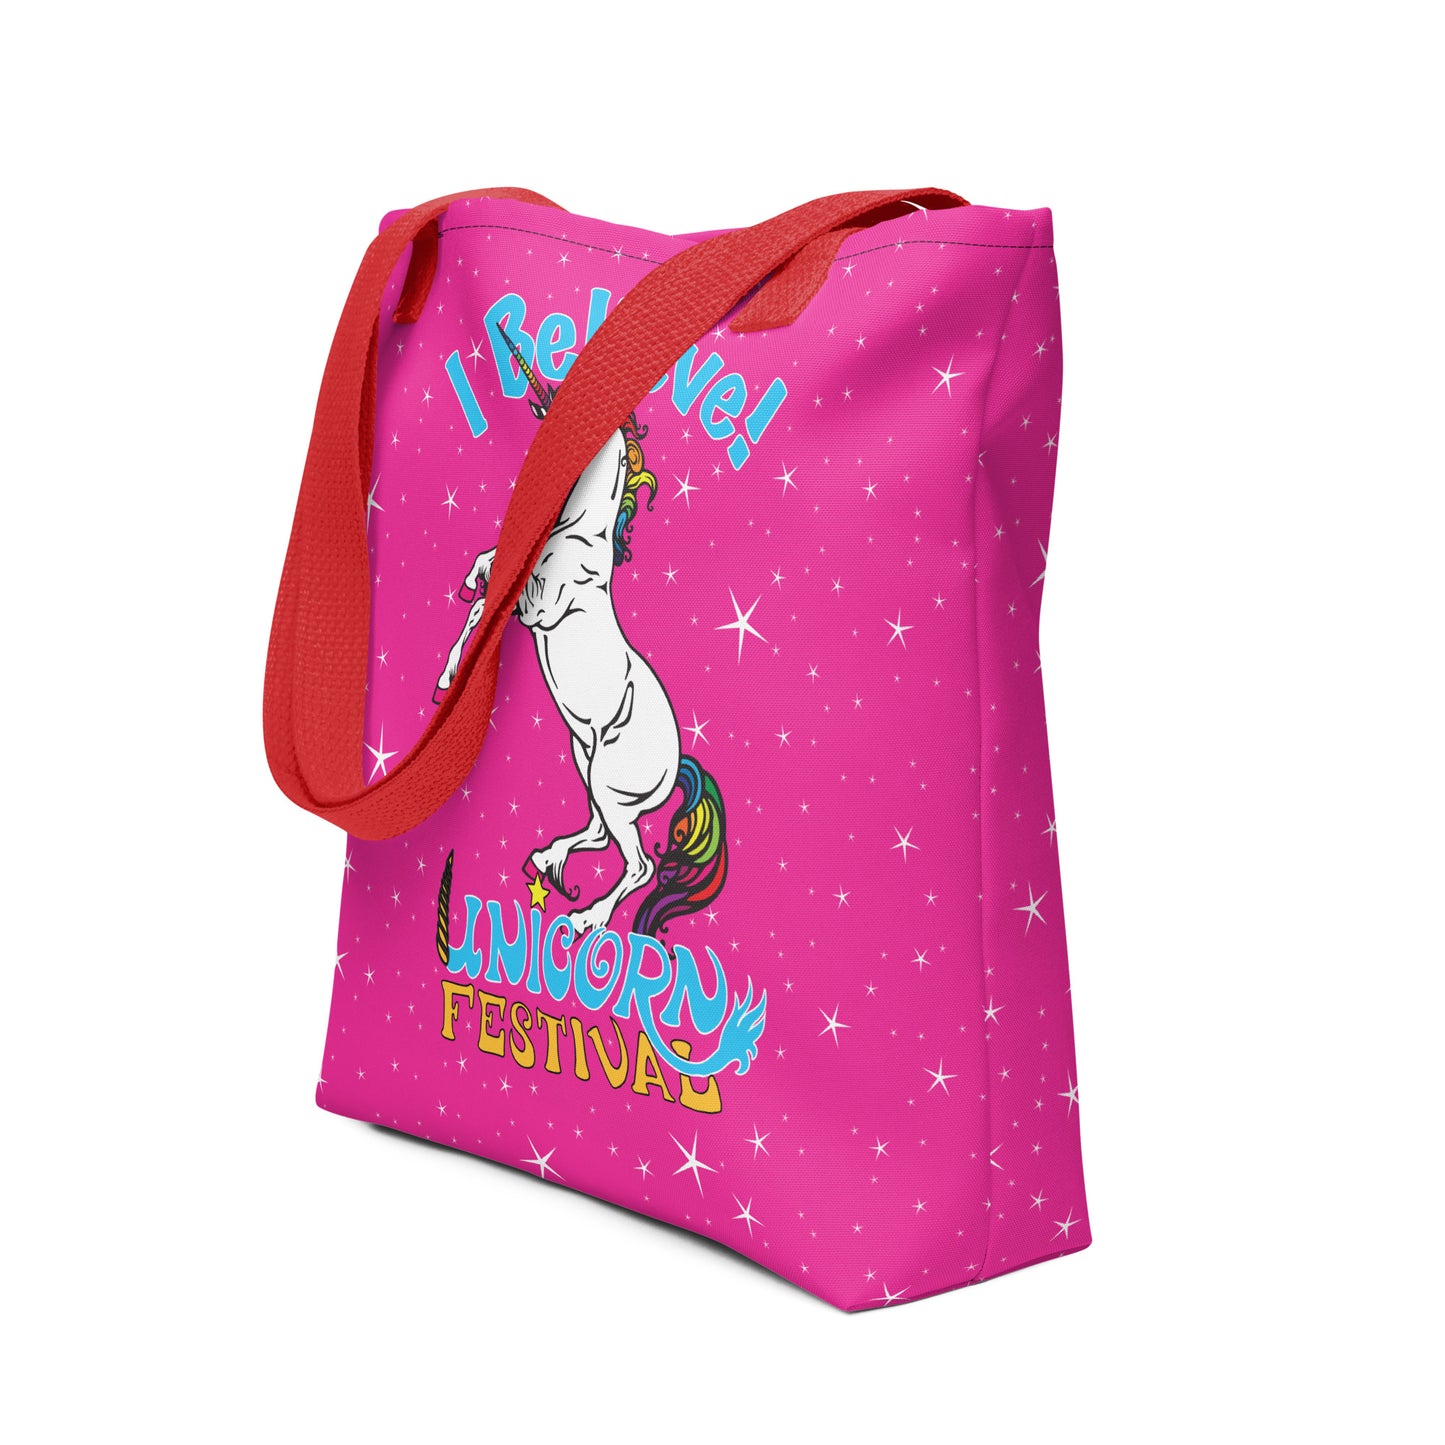 Unicorn Festival Pink Tote bag